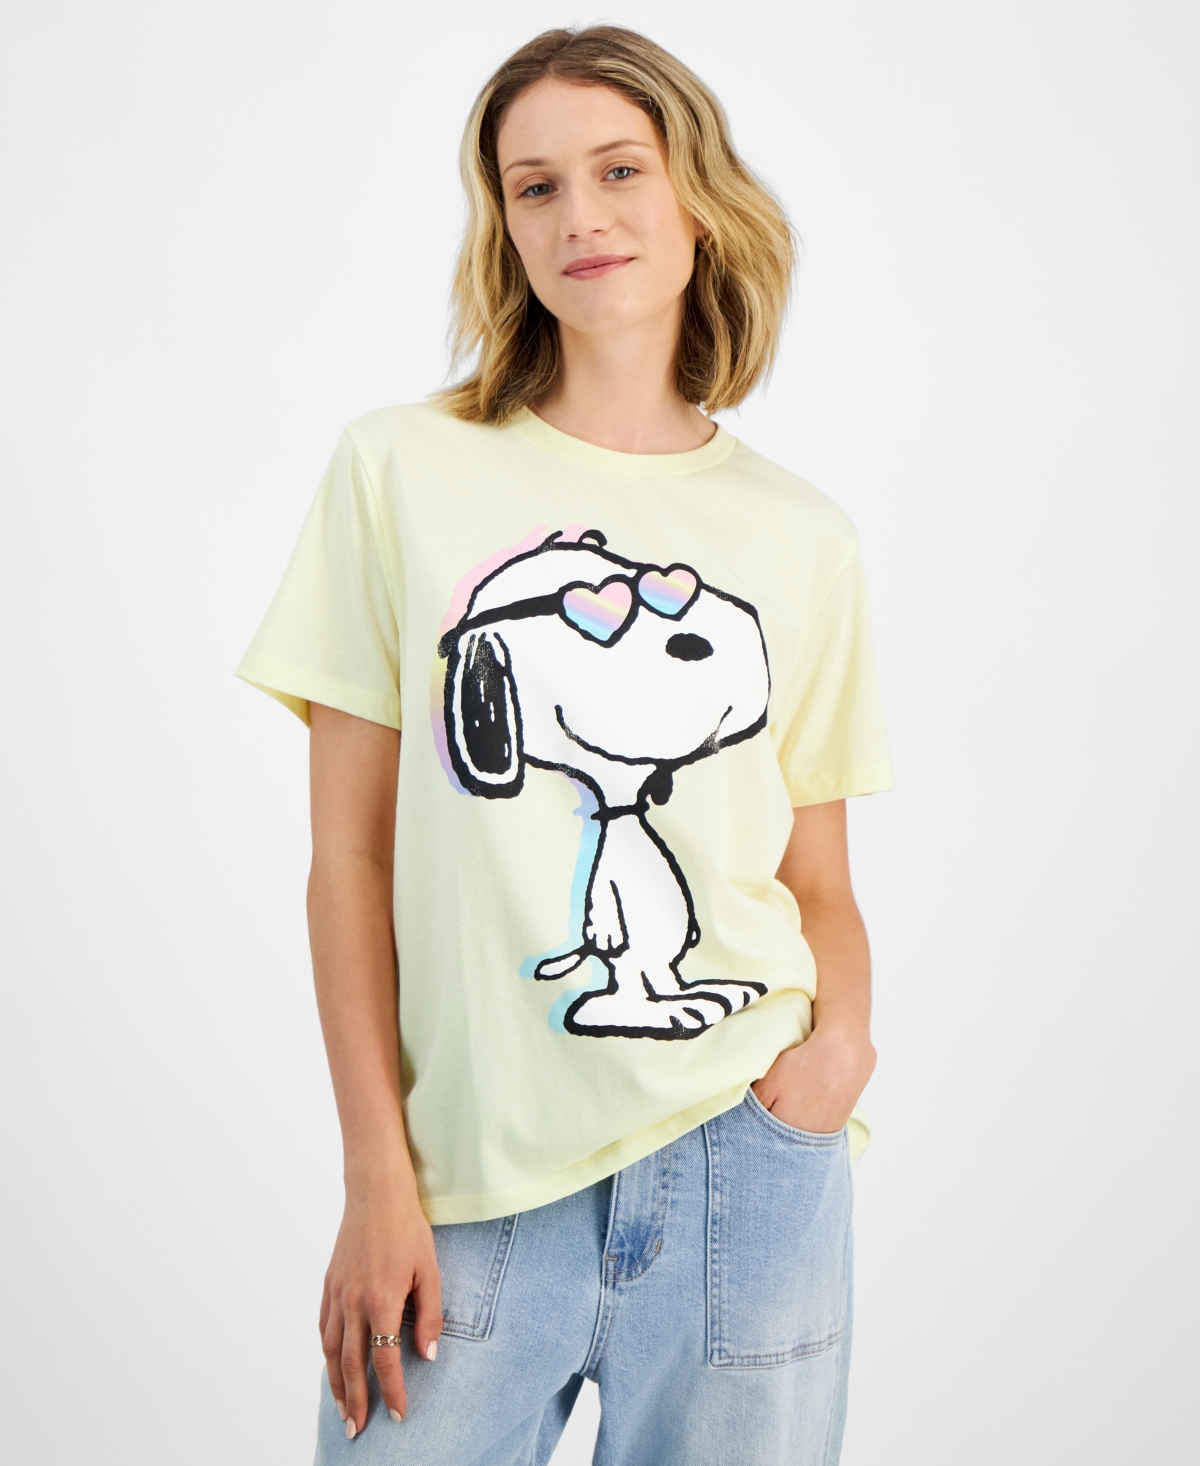 Juniors' Snoopy Graphic T-Shirt - Yellow